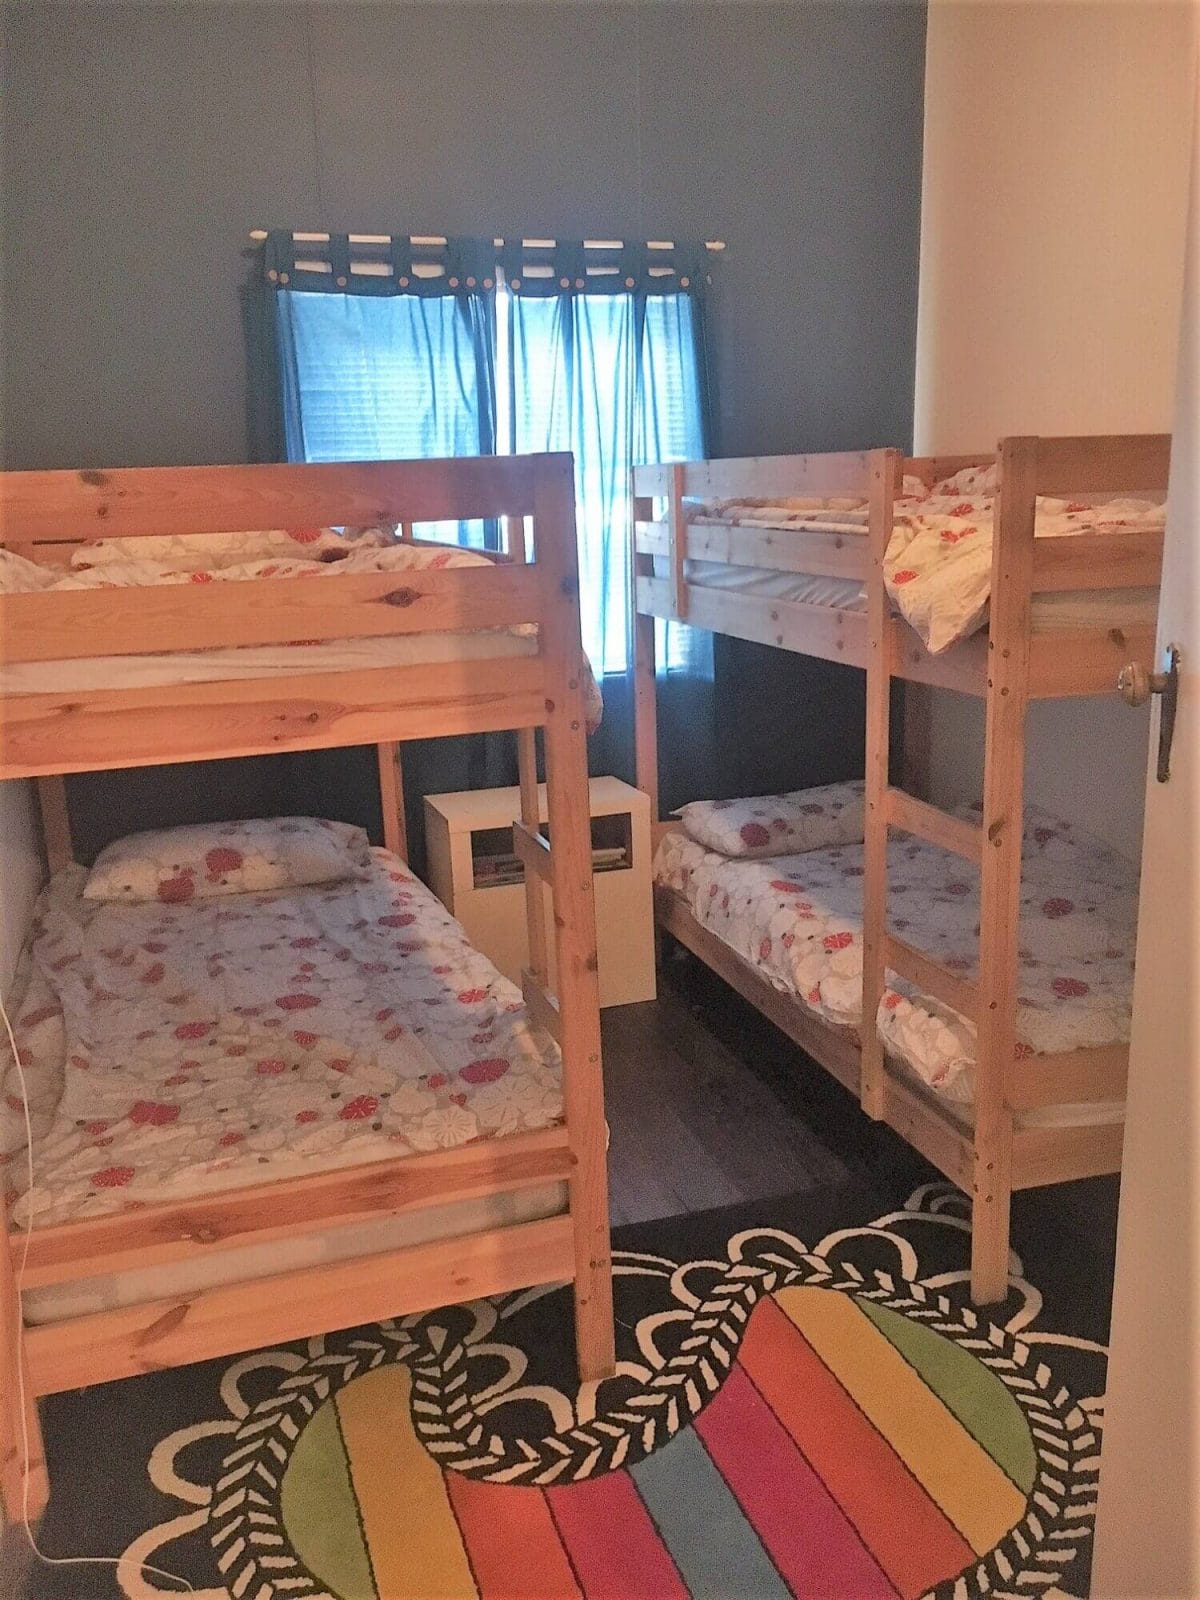 Weekender - Accommodation in Bremer Bay - 21 Barbara Street. Bunk Beds sleep 4 people comfortably